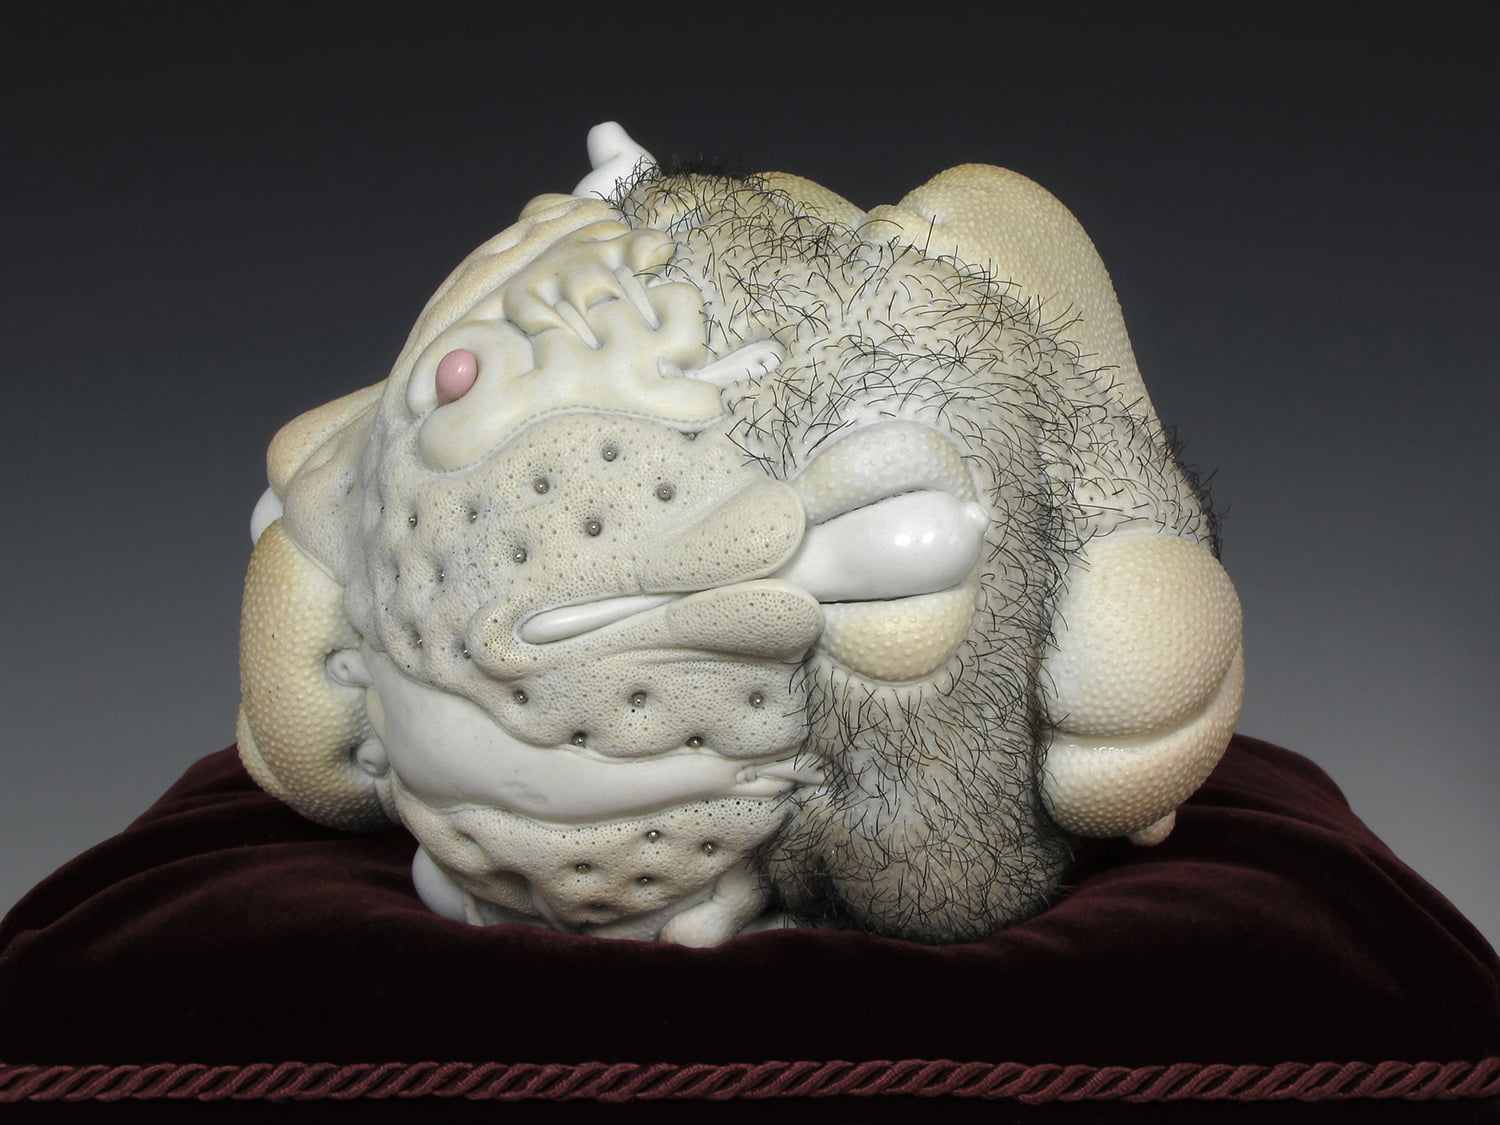 Jason Briggs "Peach". Porcelain and mixed media sculptural ceramic art.